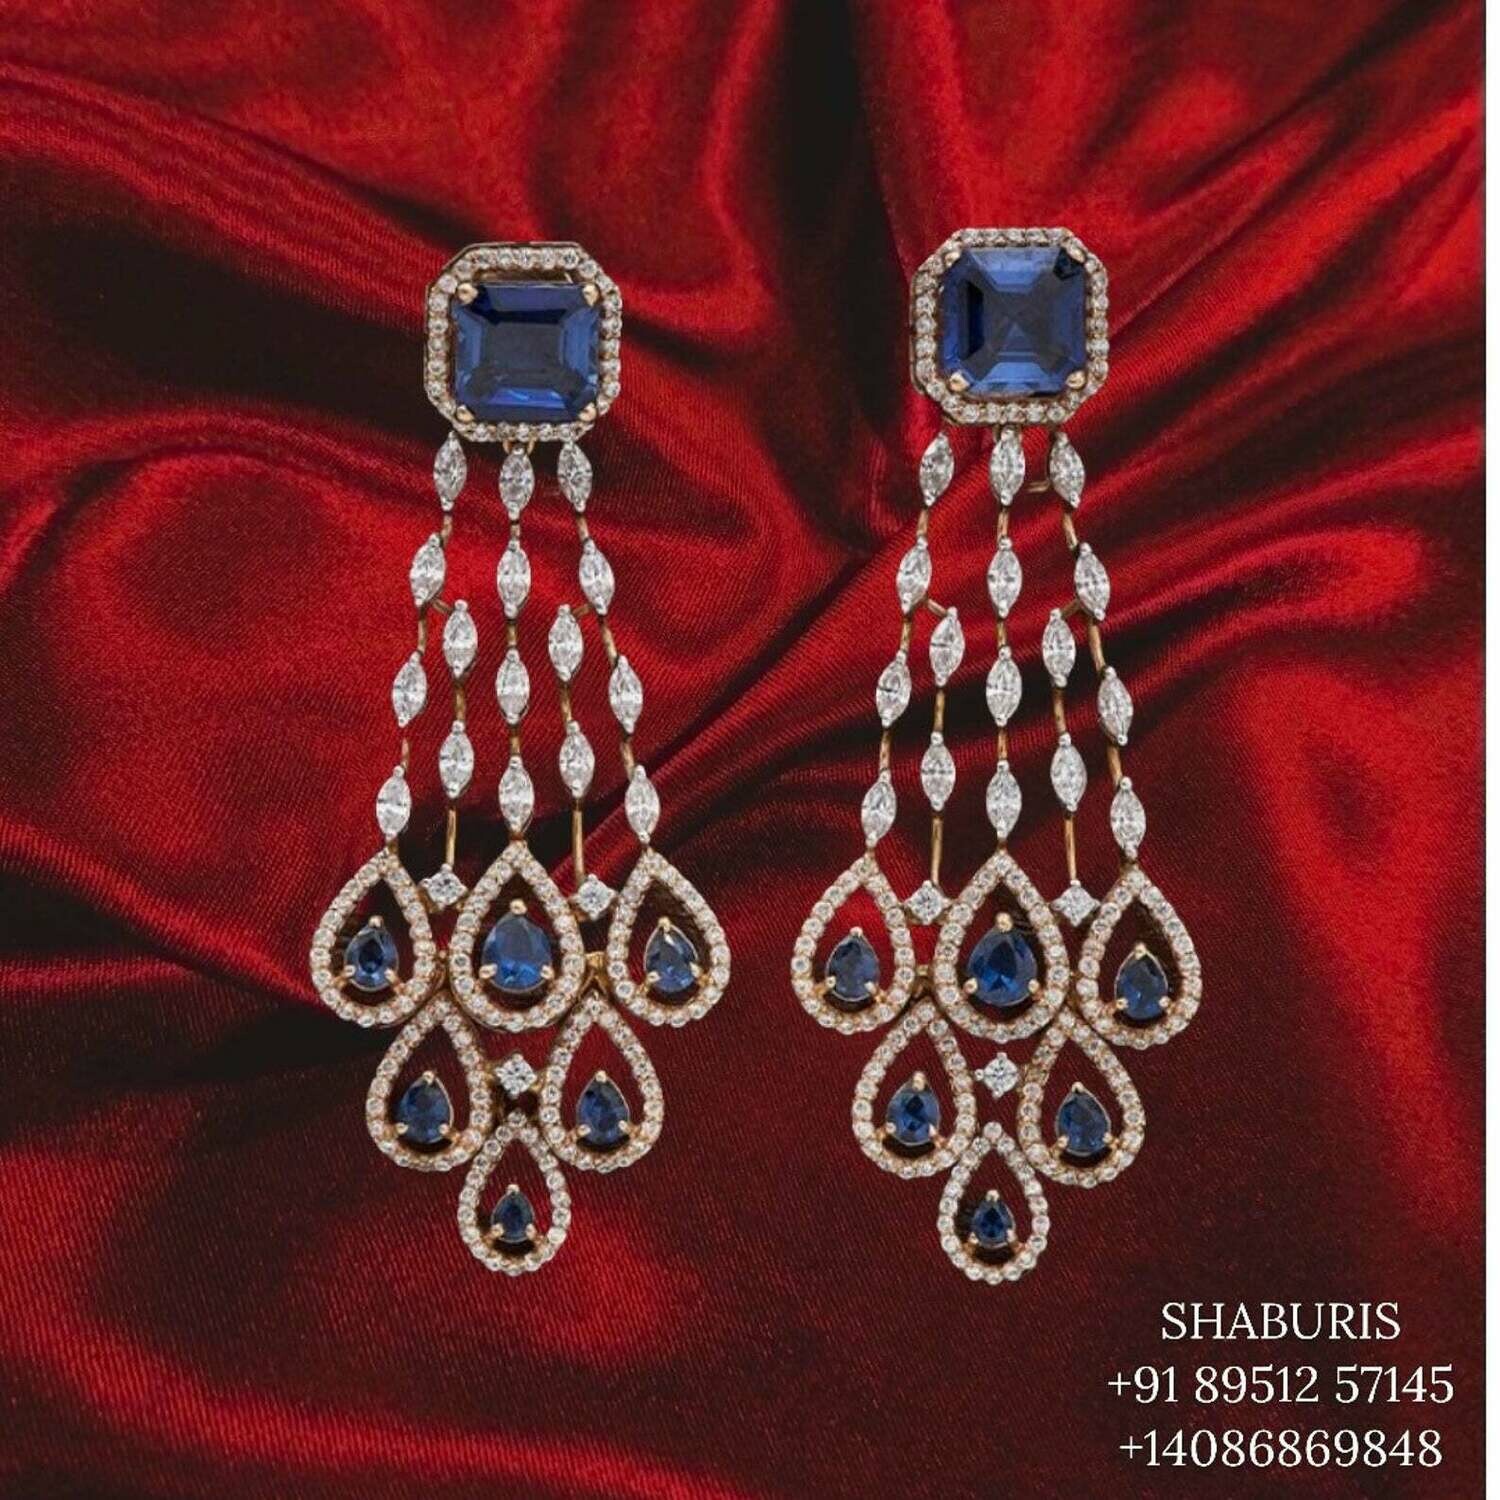 Diamond jhumka emerald jhumka silver jewelry jewelry sets indian jewelry party wear jewelry danglers tanzanite SHABURIS